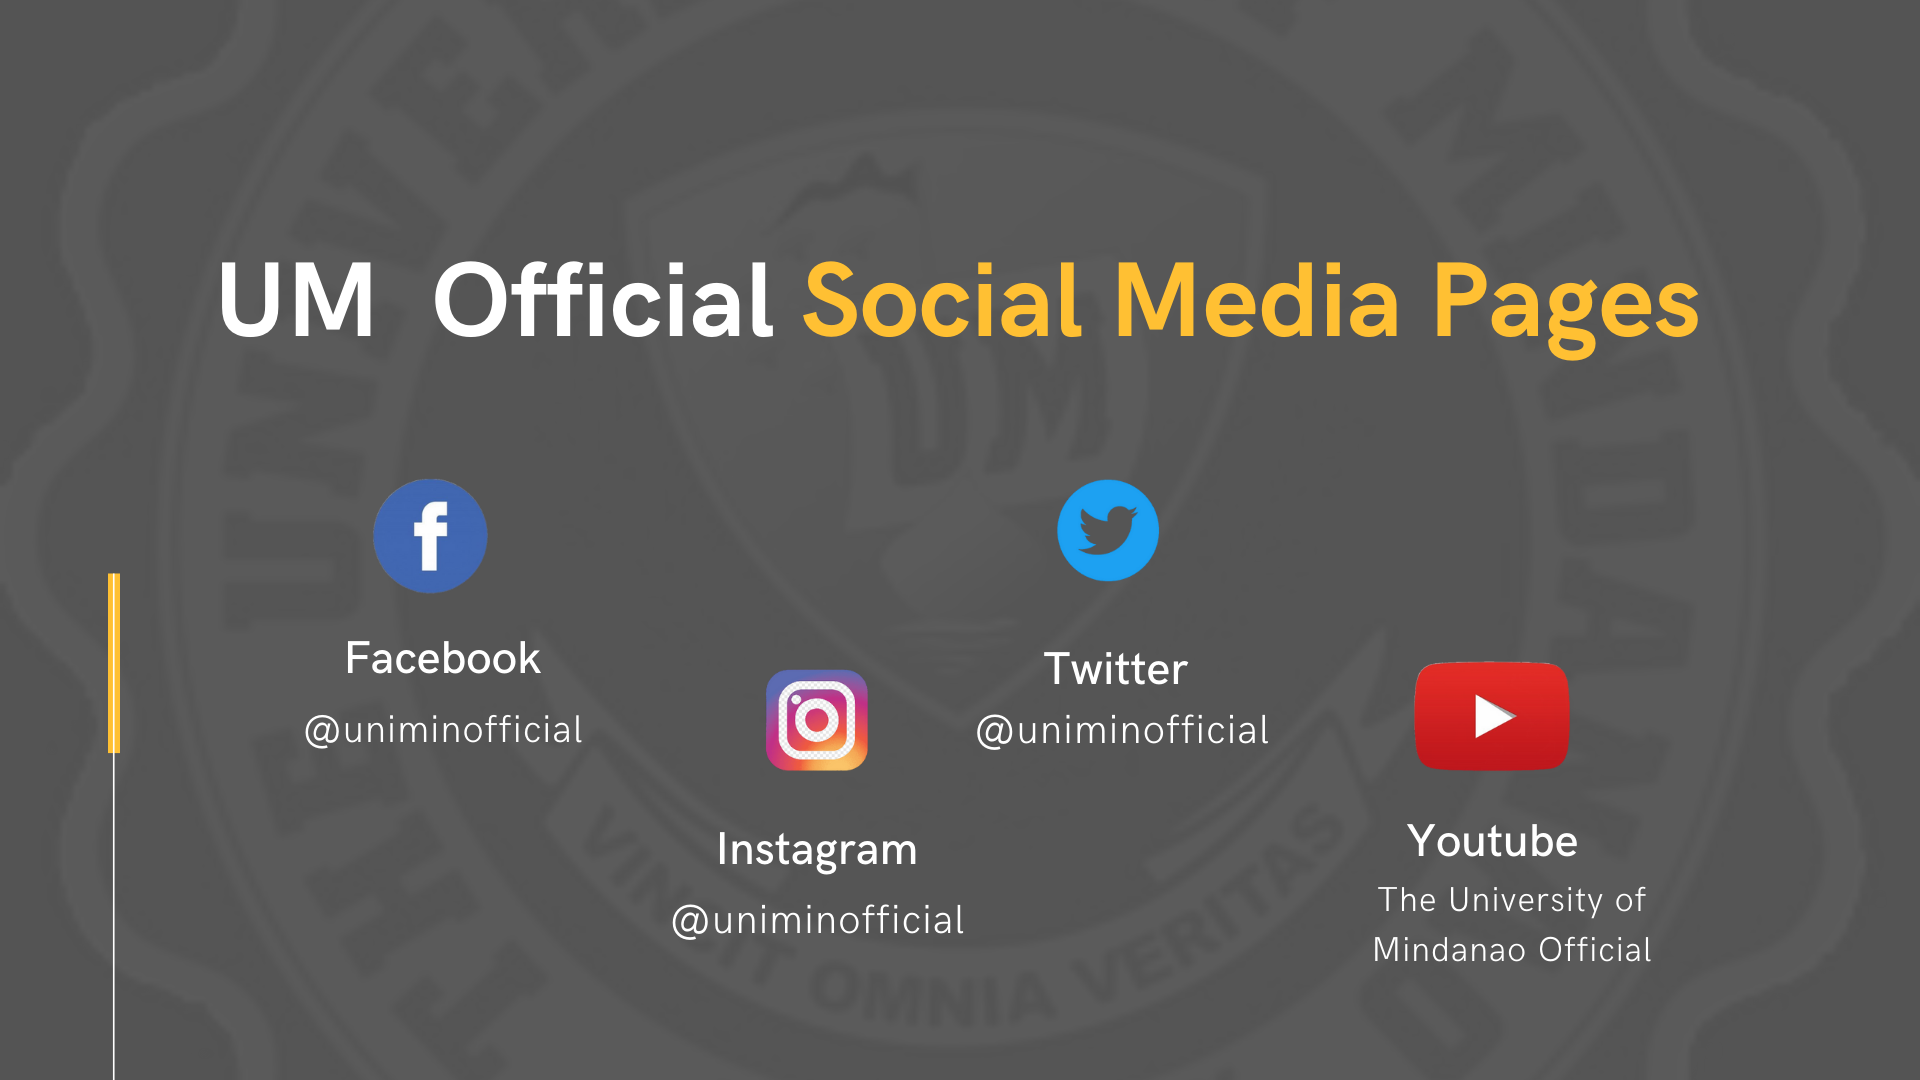 The UM Official Social Media Accounts